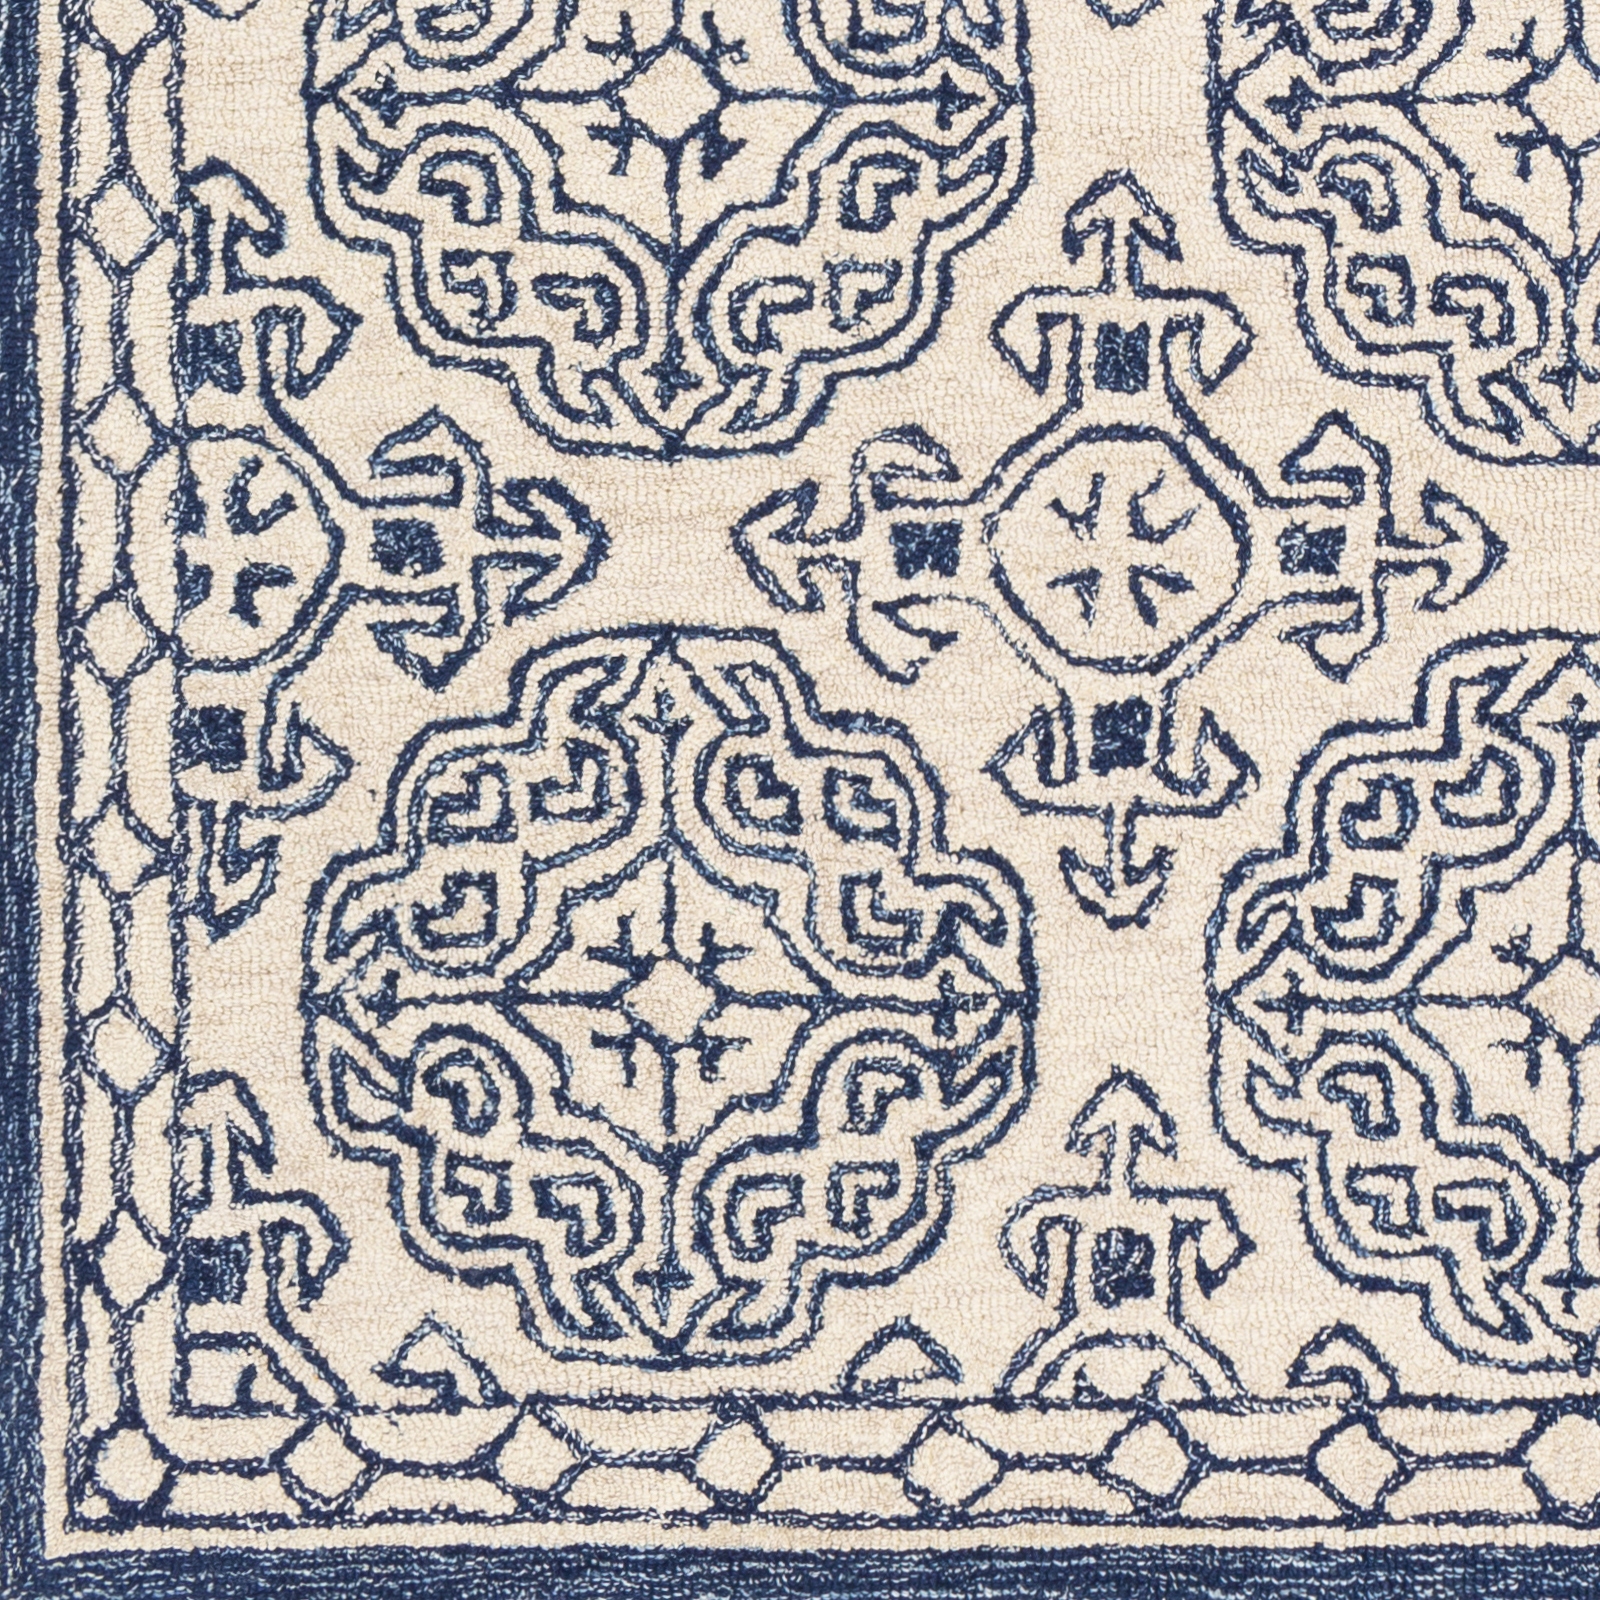 Granada Rug, 2' x 3' - Image 5